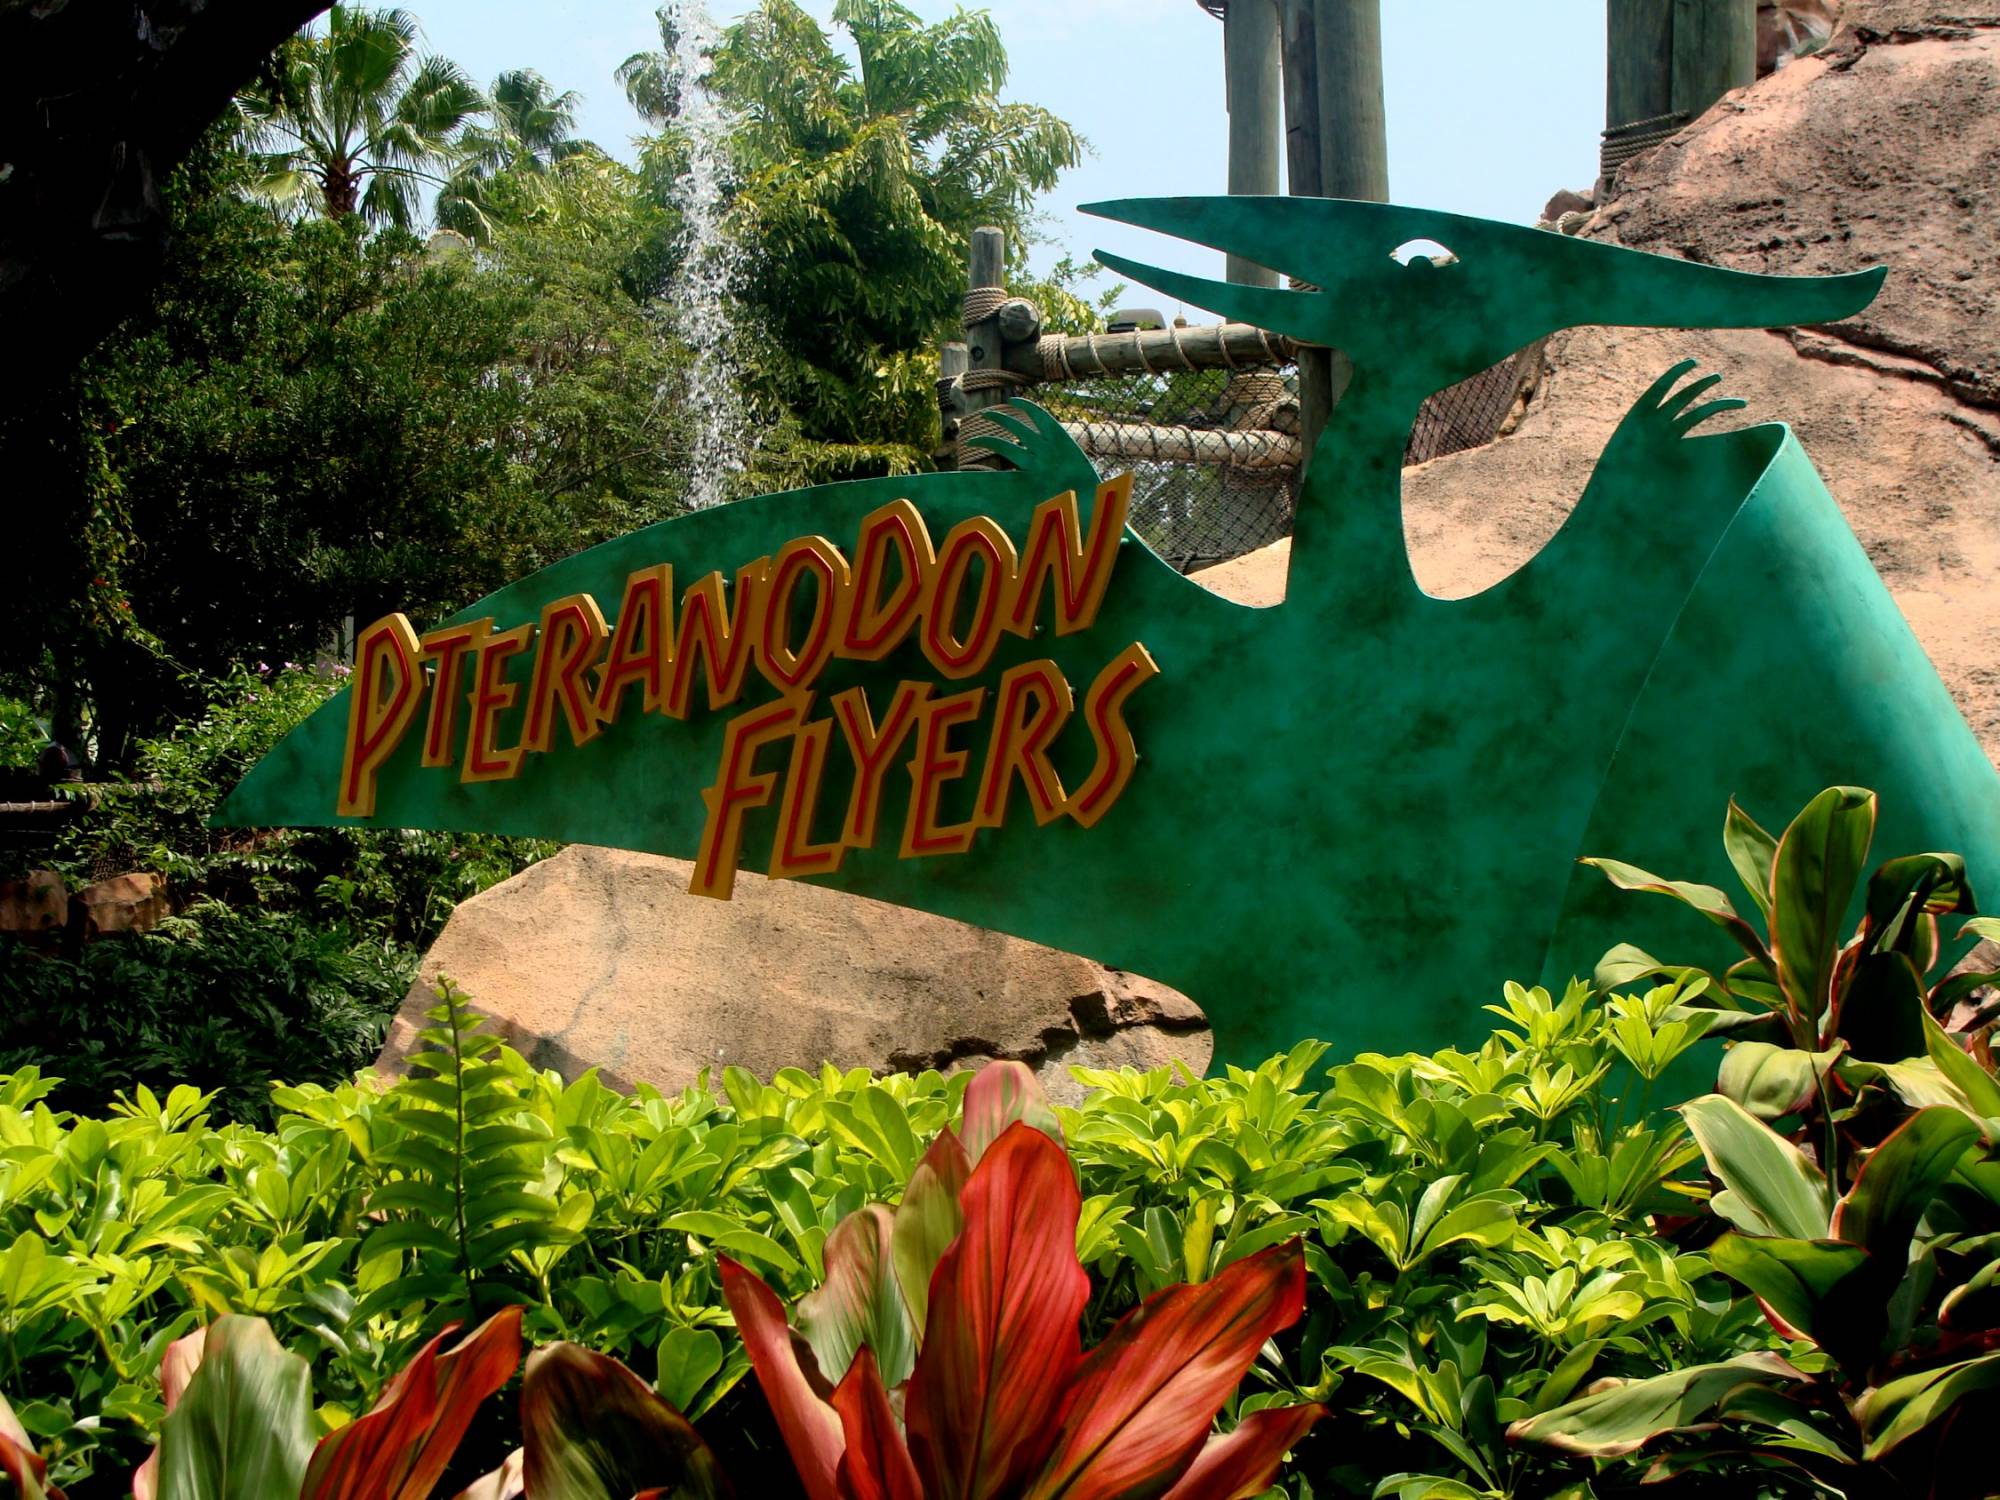 Pteranodon Flyers entrance sign